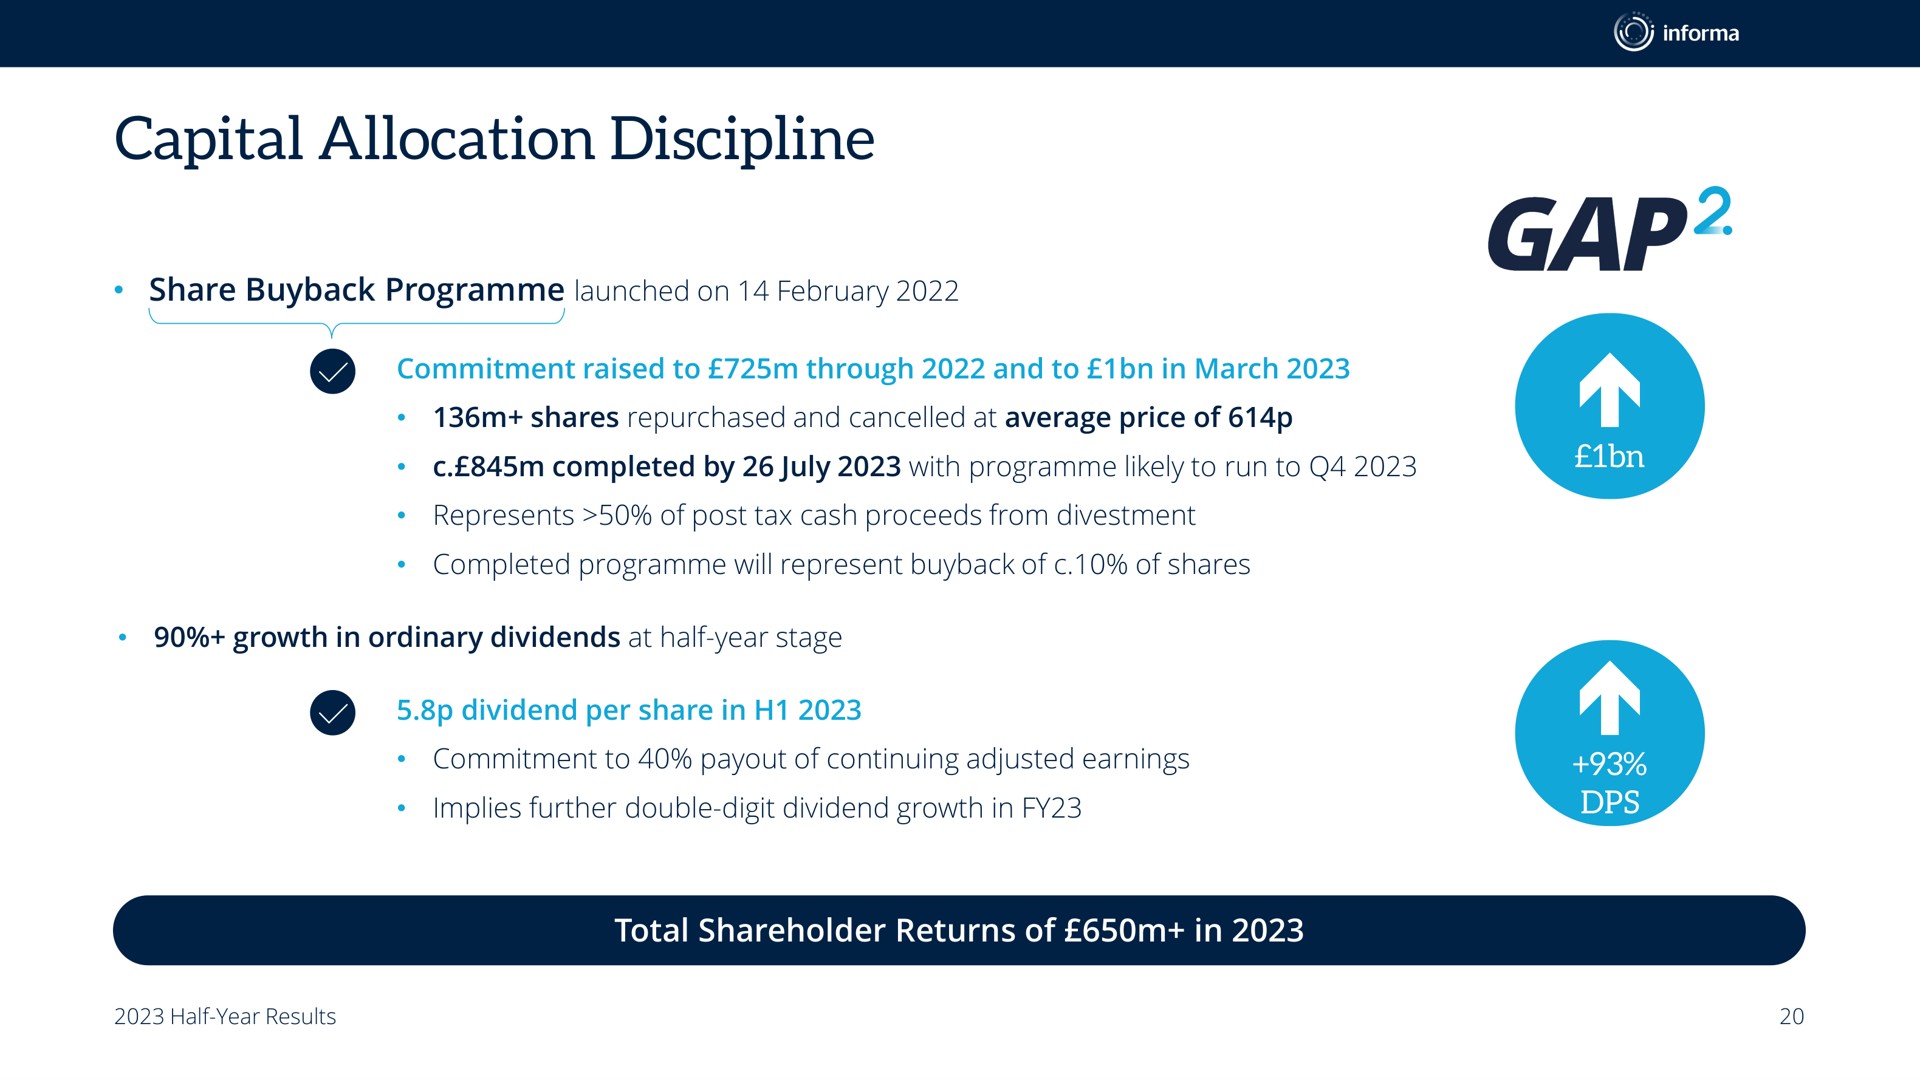 capital allocation discipline gap | Informa